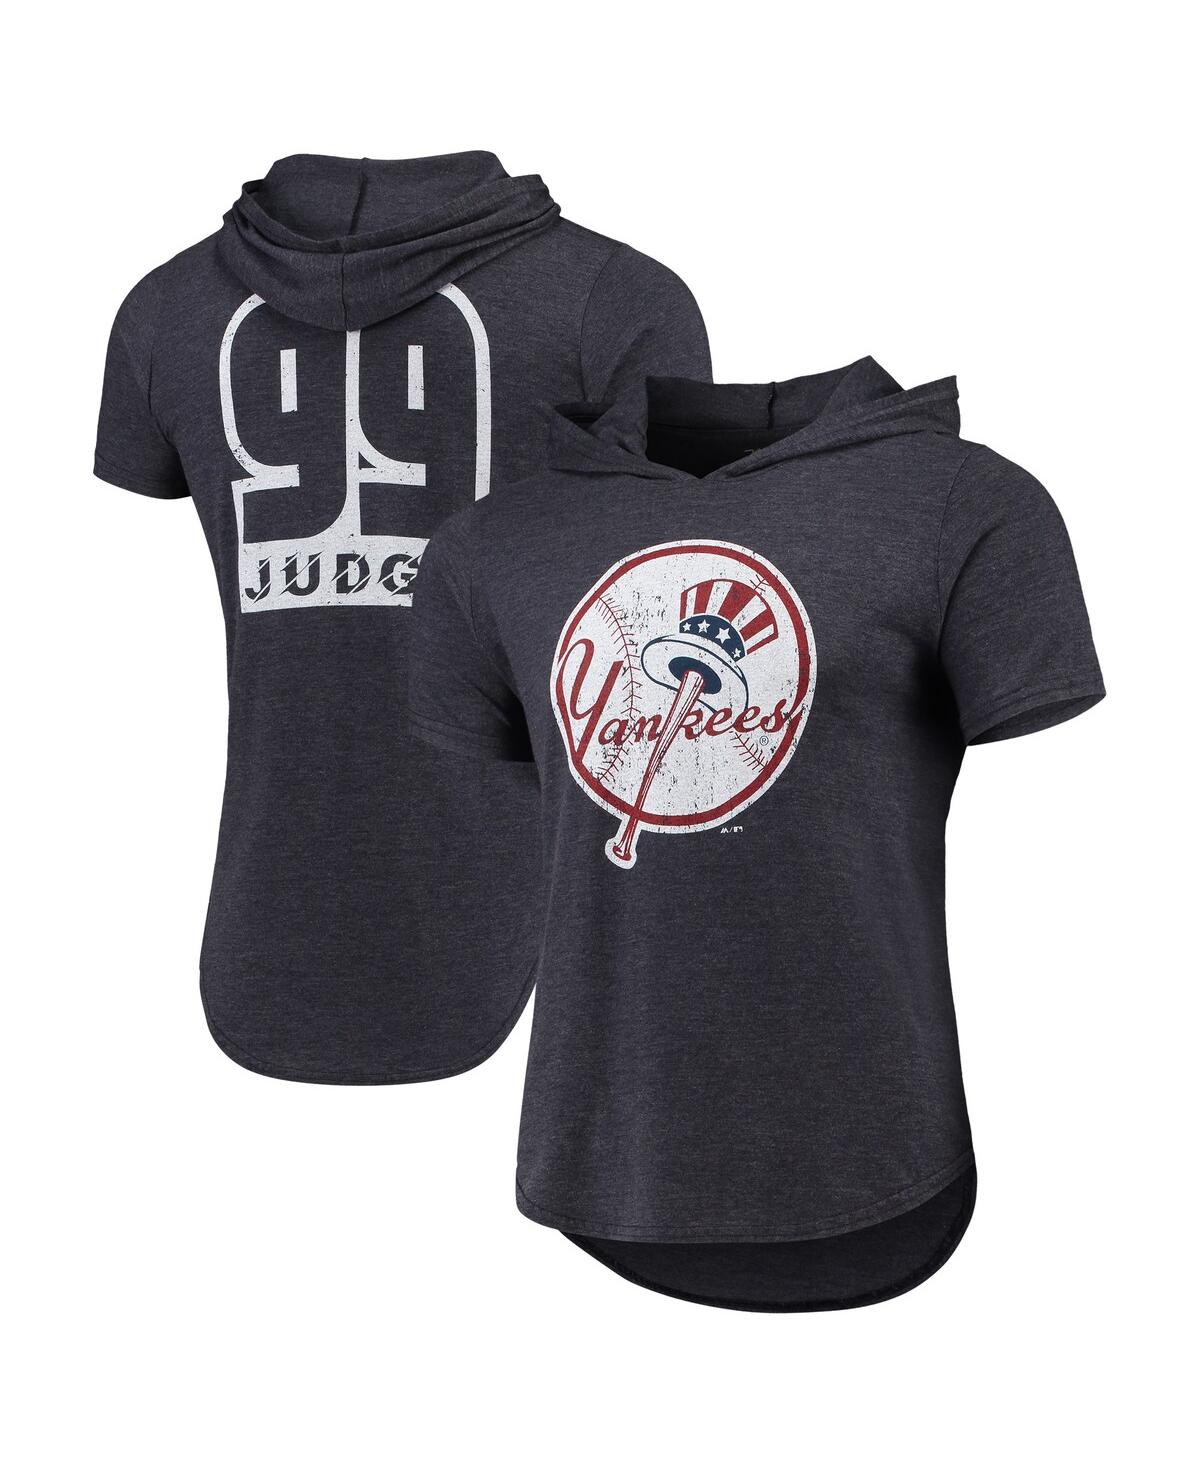 Men's Navy Aaron Judge New York Yankees Softhand Short Sleeve Player Hoodie T-shirt - Navy